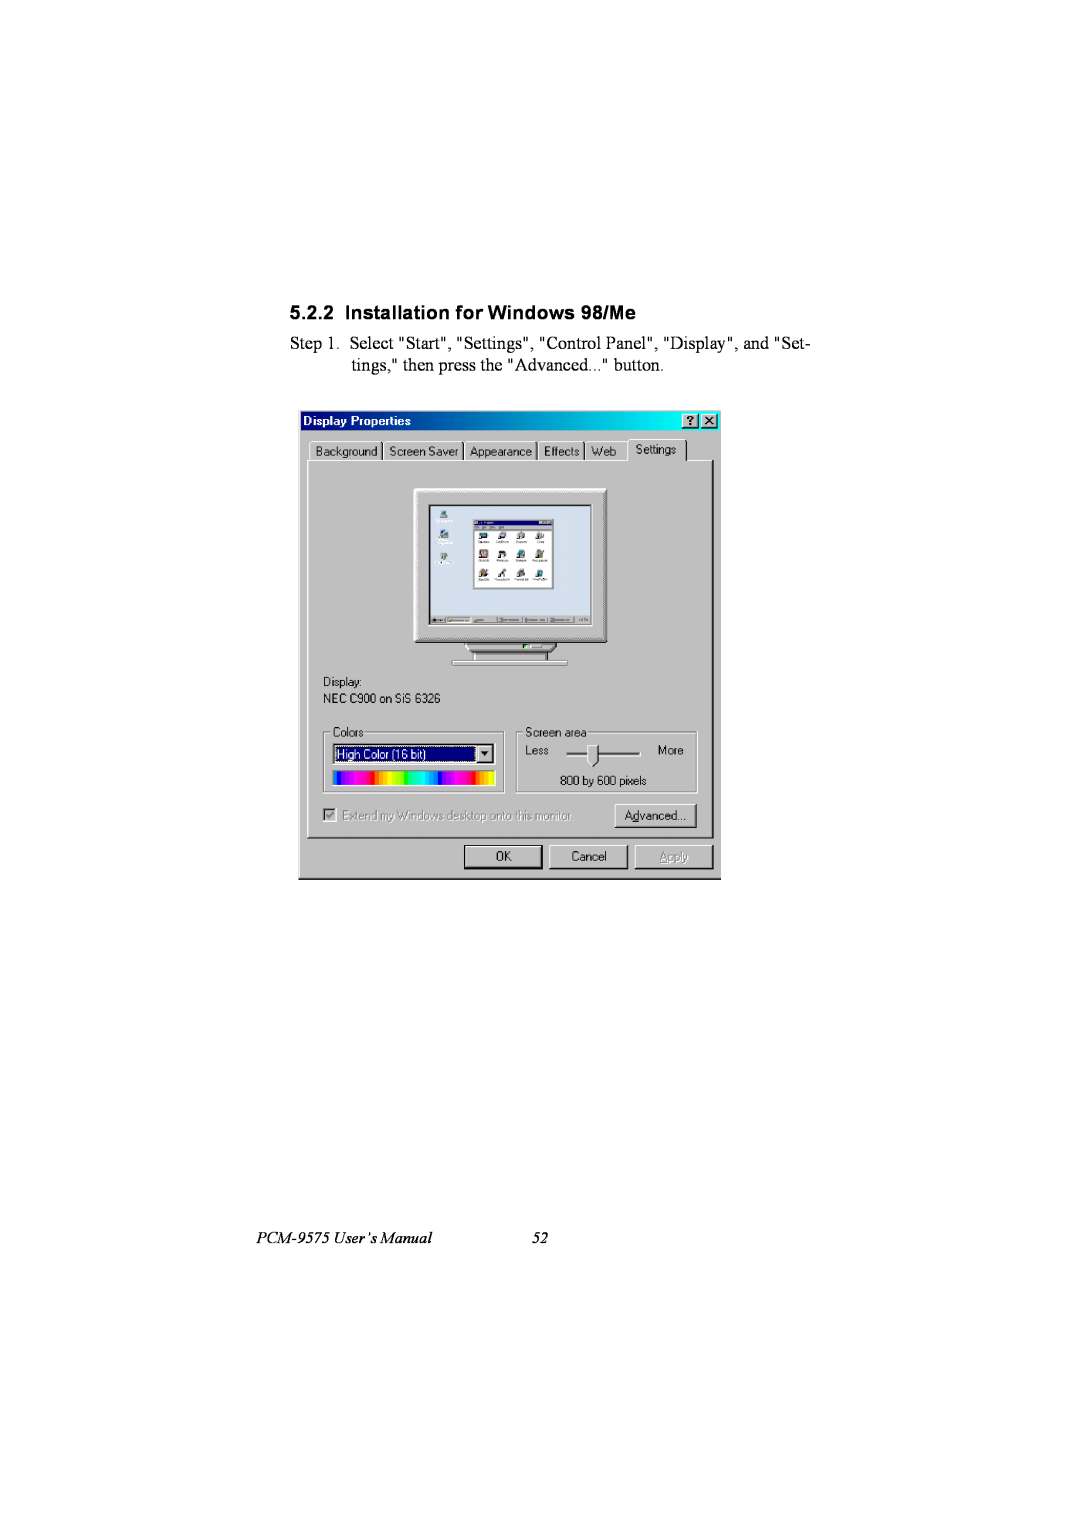 IBM 100/10 user manual Installation for Windows 98/Me, PCM-9575 User’s Manual 